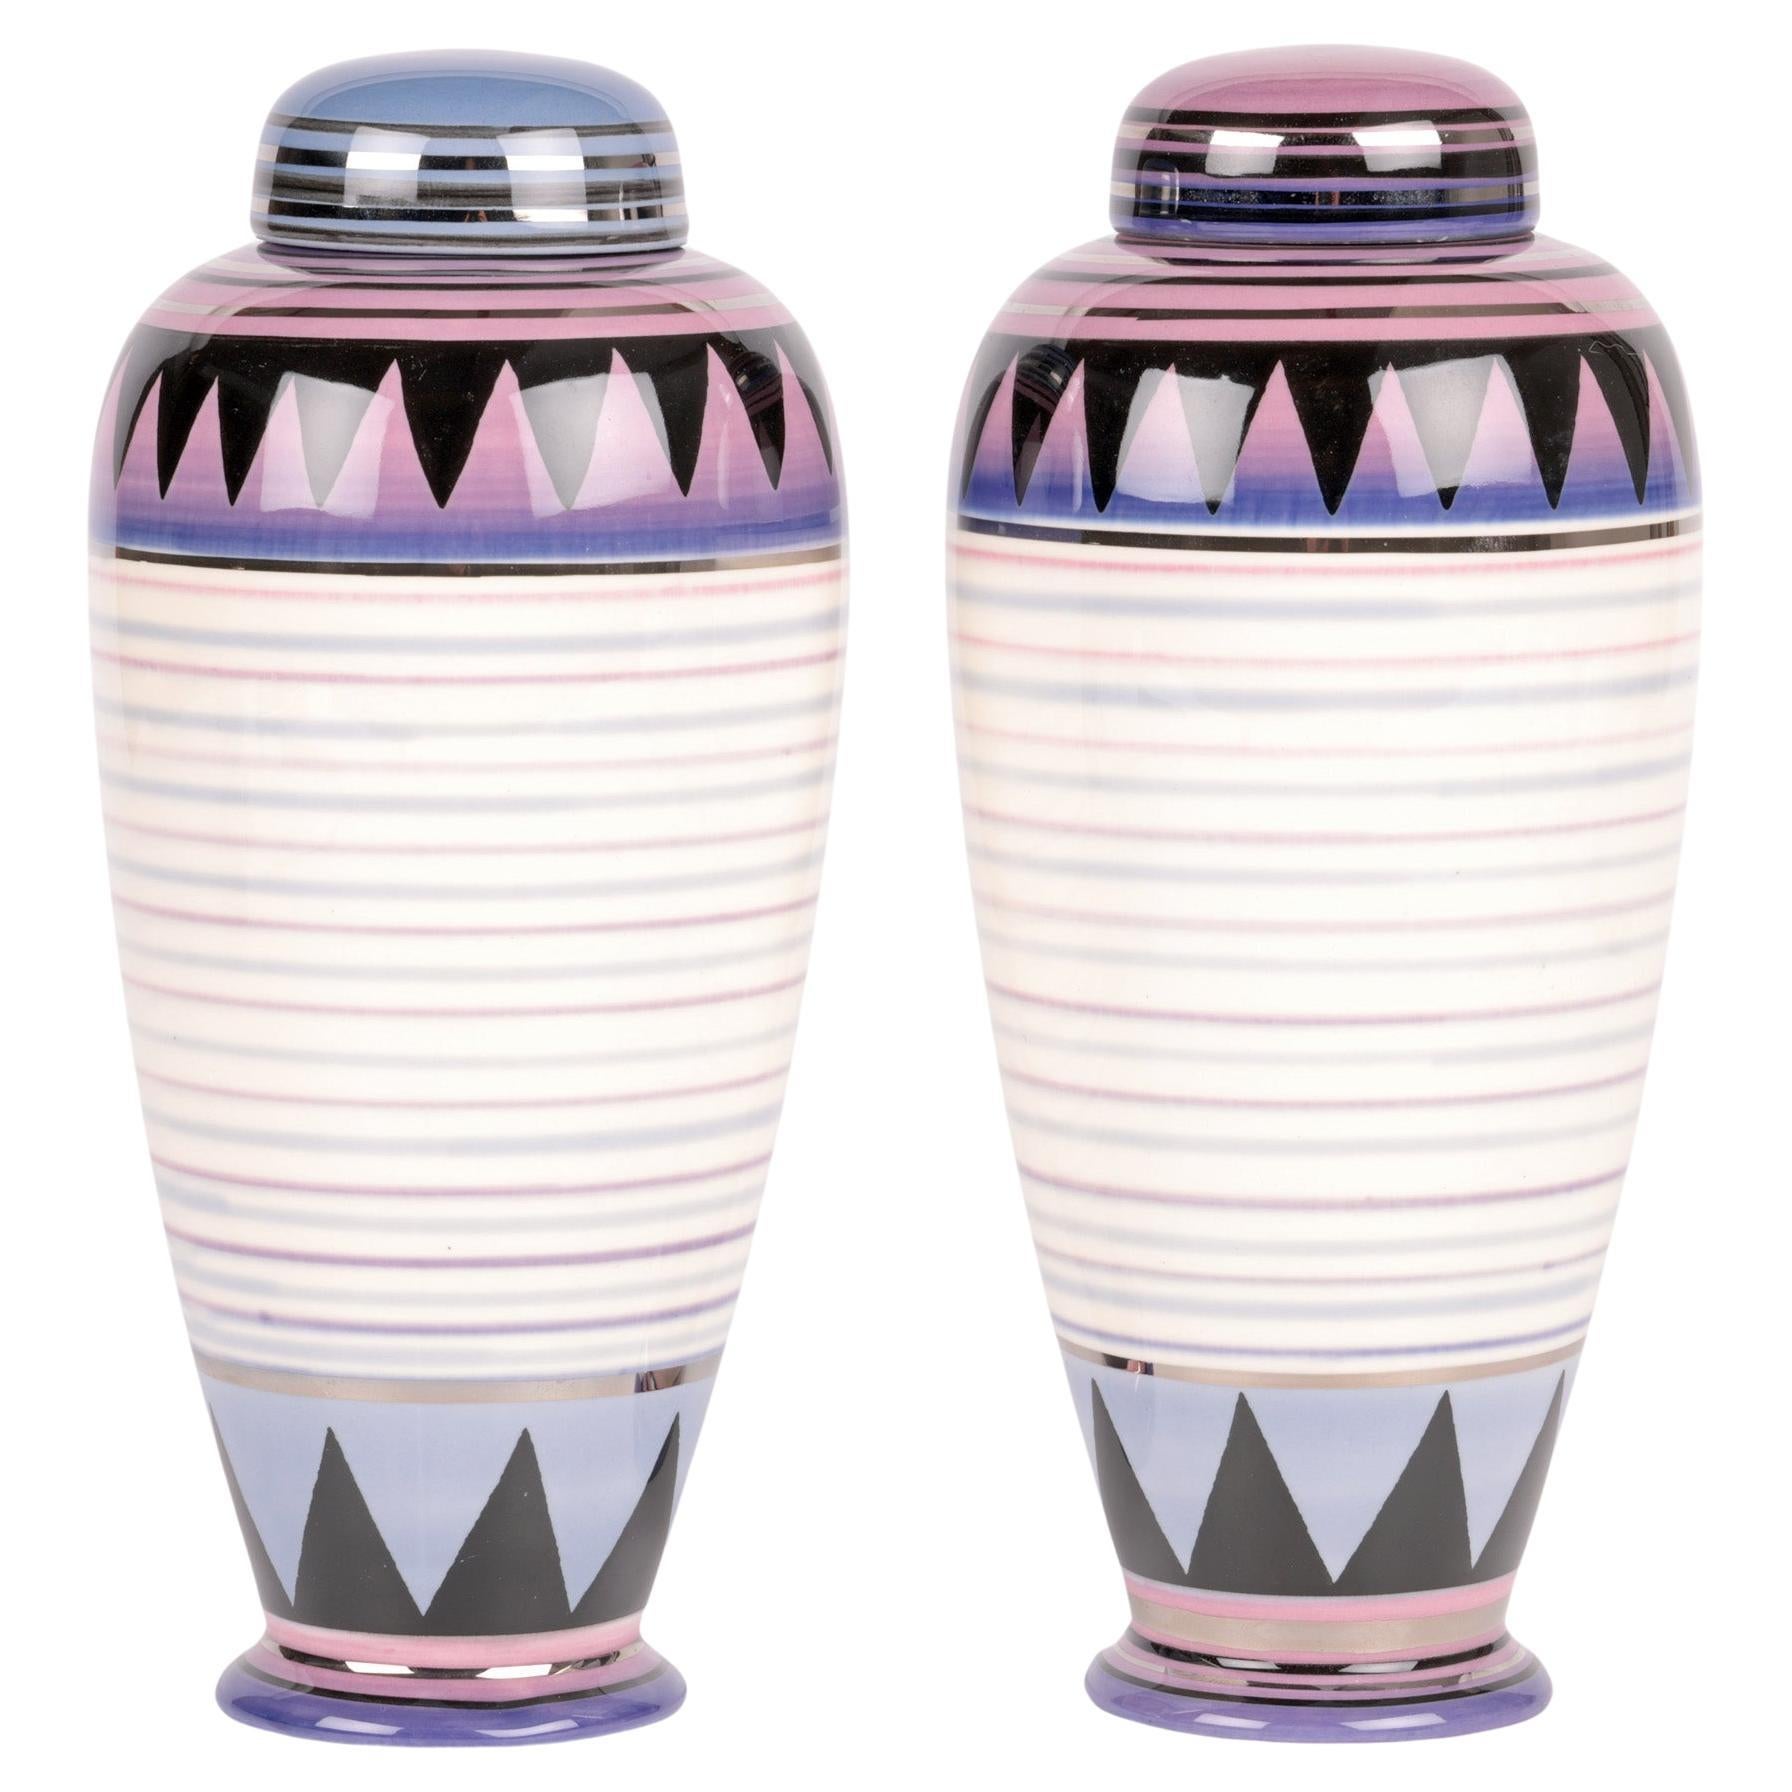 Moorland Pottery Pair Ceramic Lustre Lidded Vases  